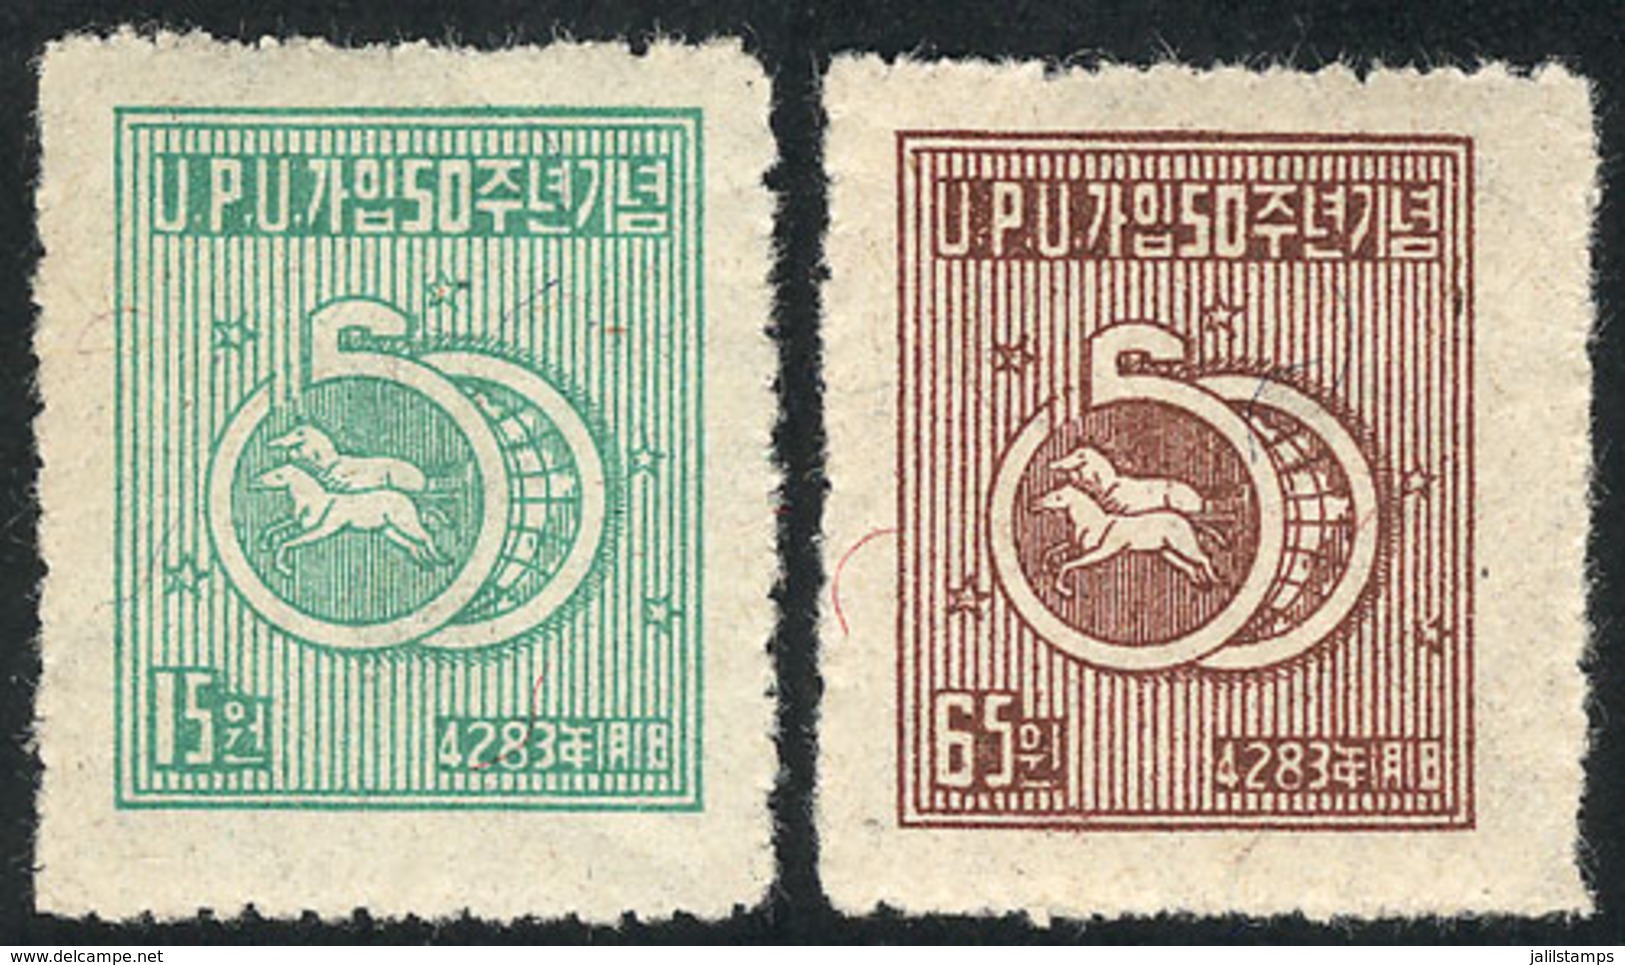 SOUTH KOREA: Sc.114/115, 1950 Old Postal Medal (horses), Cmpl. Set Of 2 MNH Values, VF Quality! - Korea (Süd-)